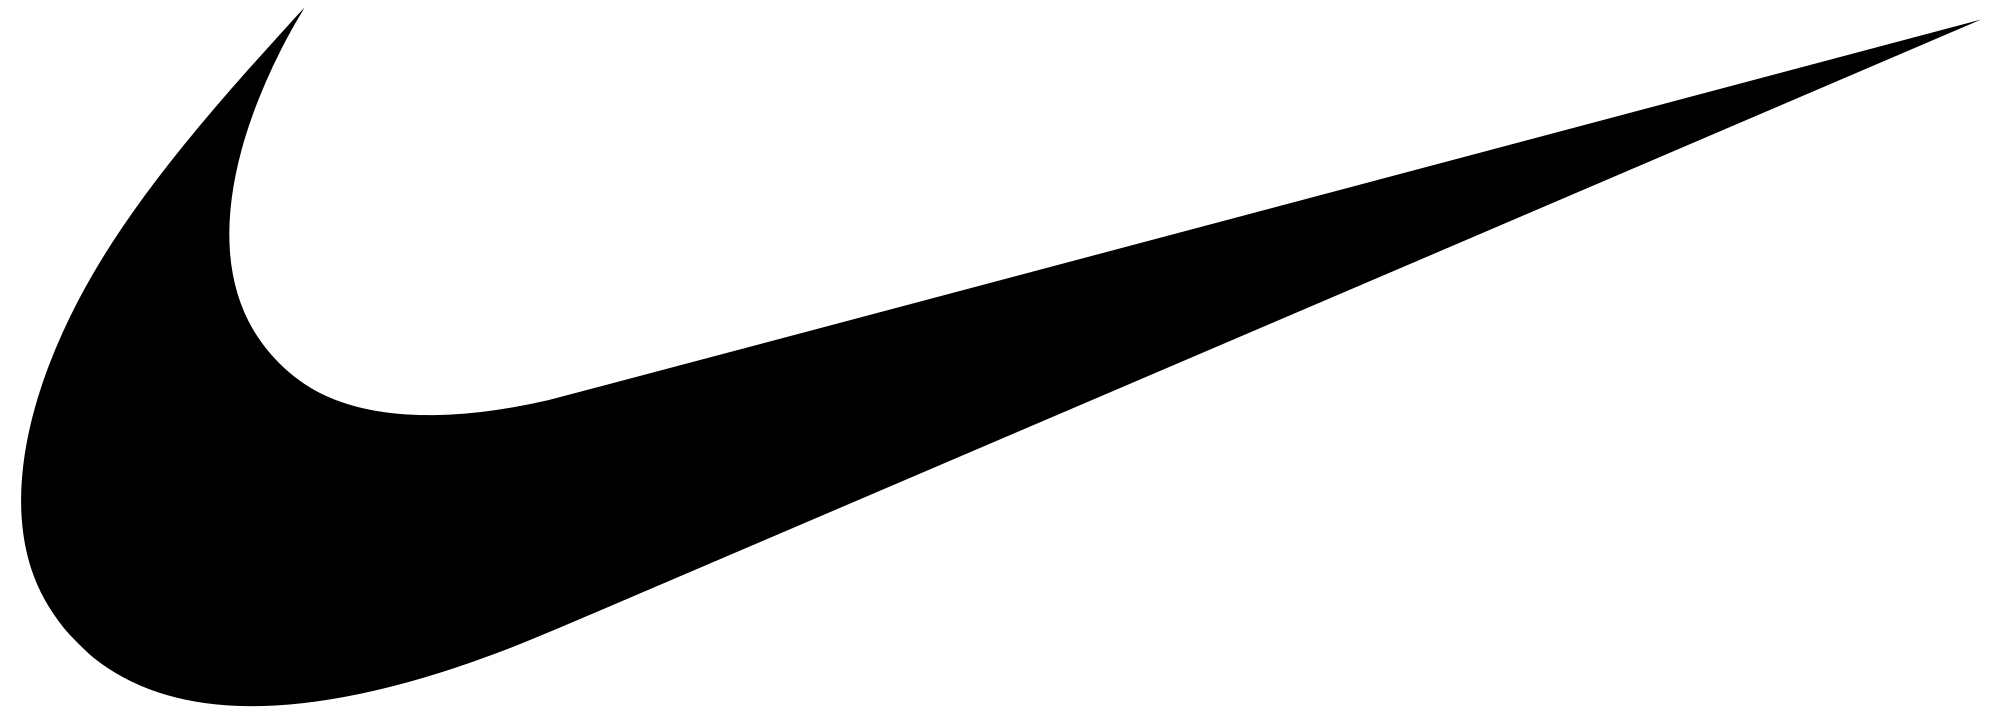 Nike Swoosh Logo Png Transparent Background Free Download 49339